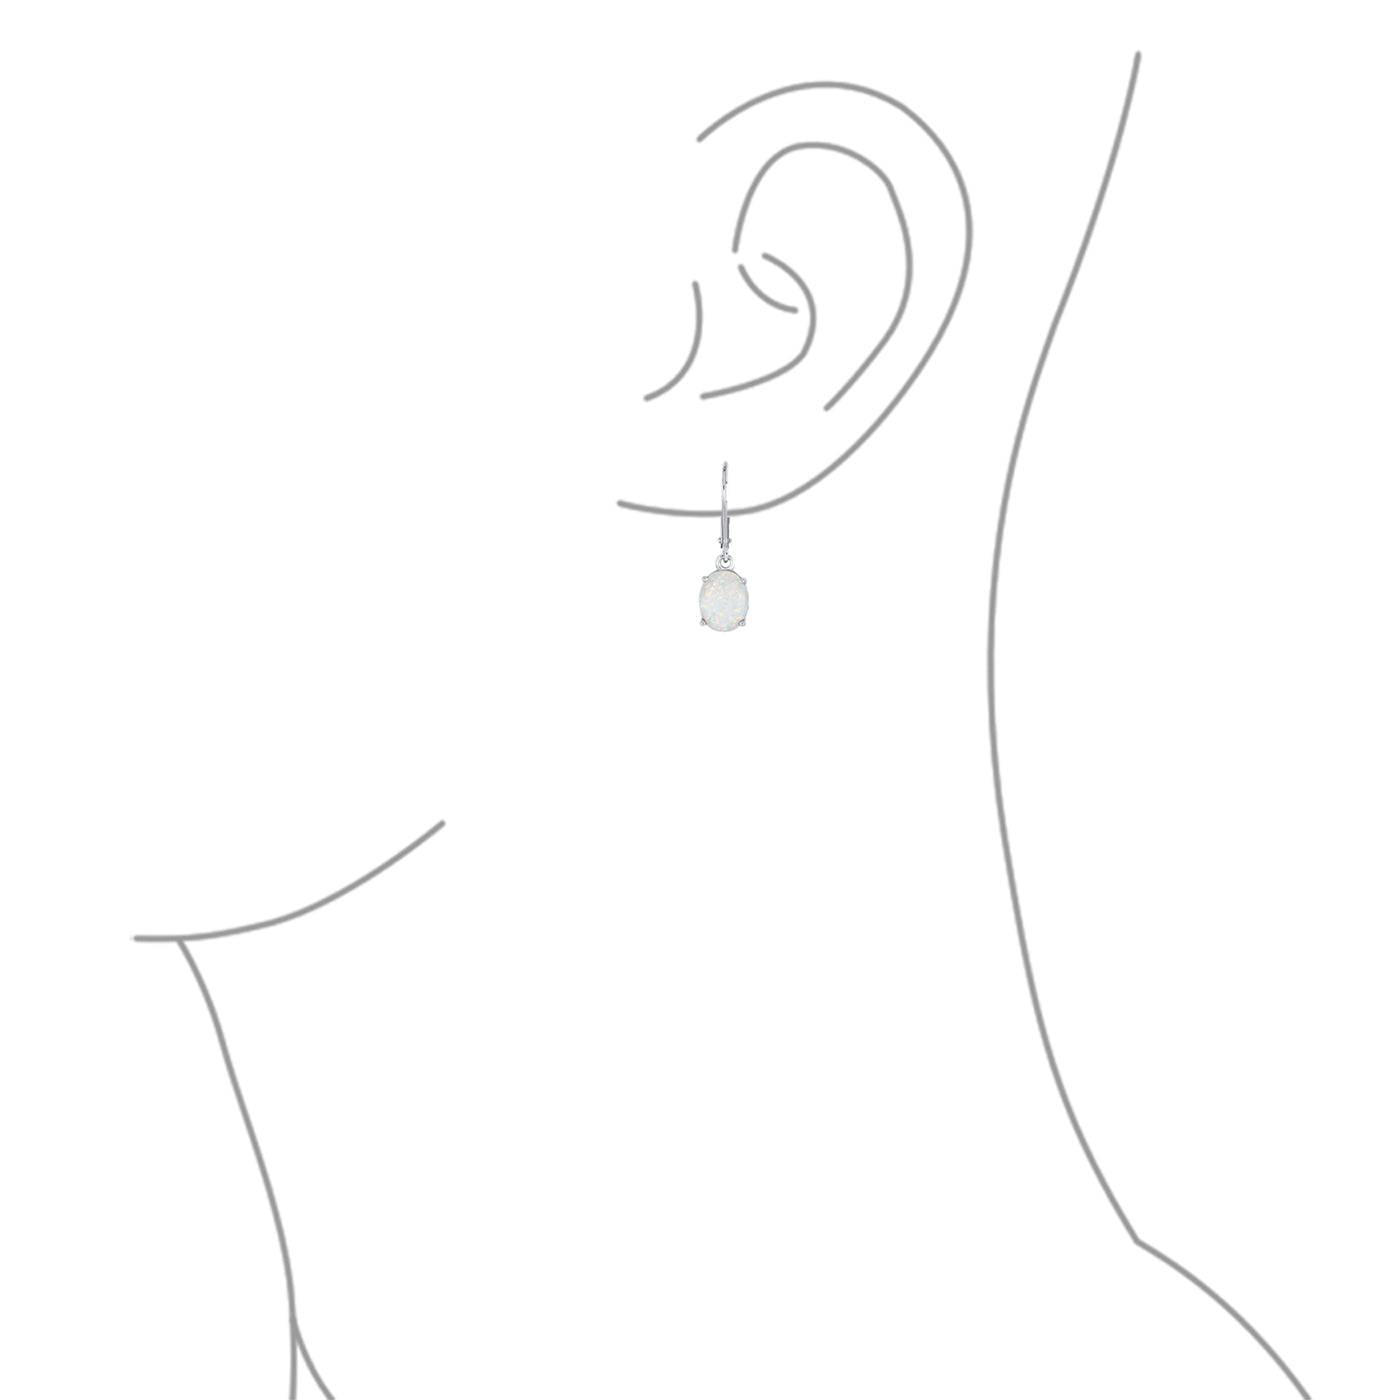 Oval White Opal Dangle Lever back Earrings .925Sterling Silver